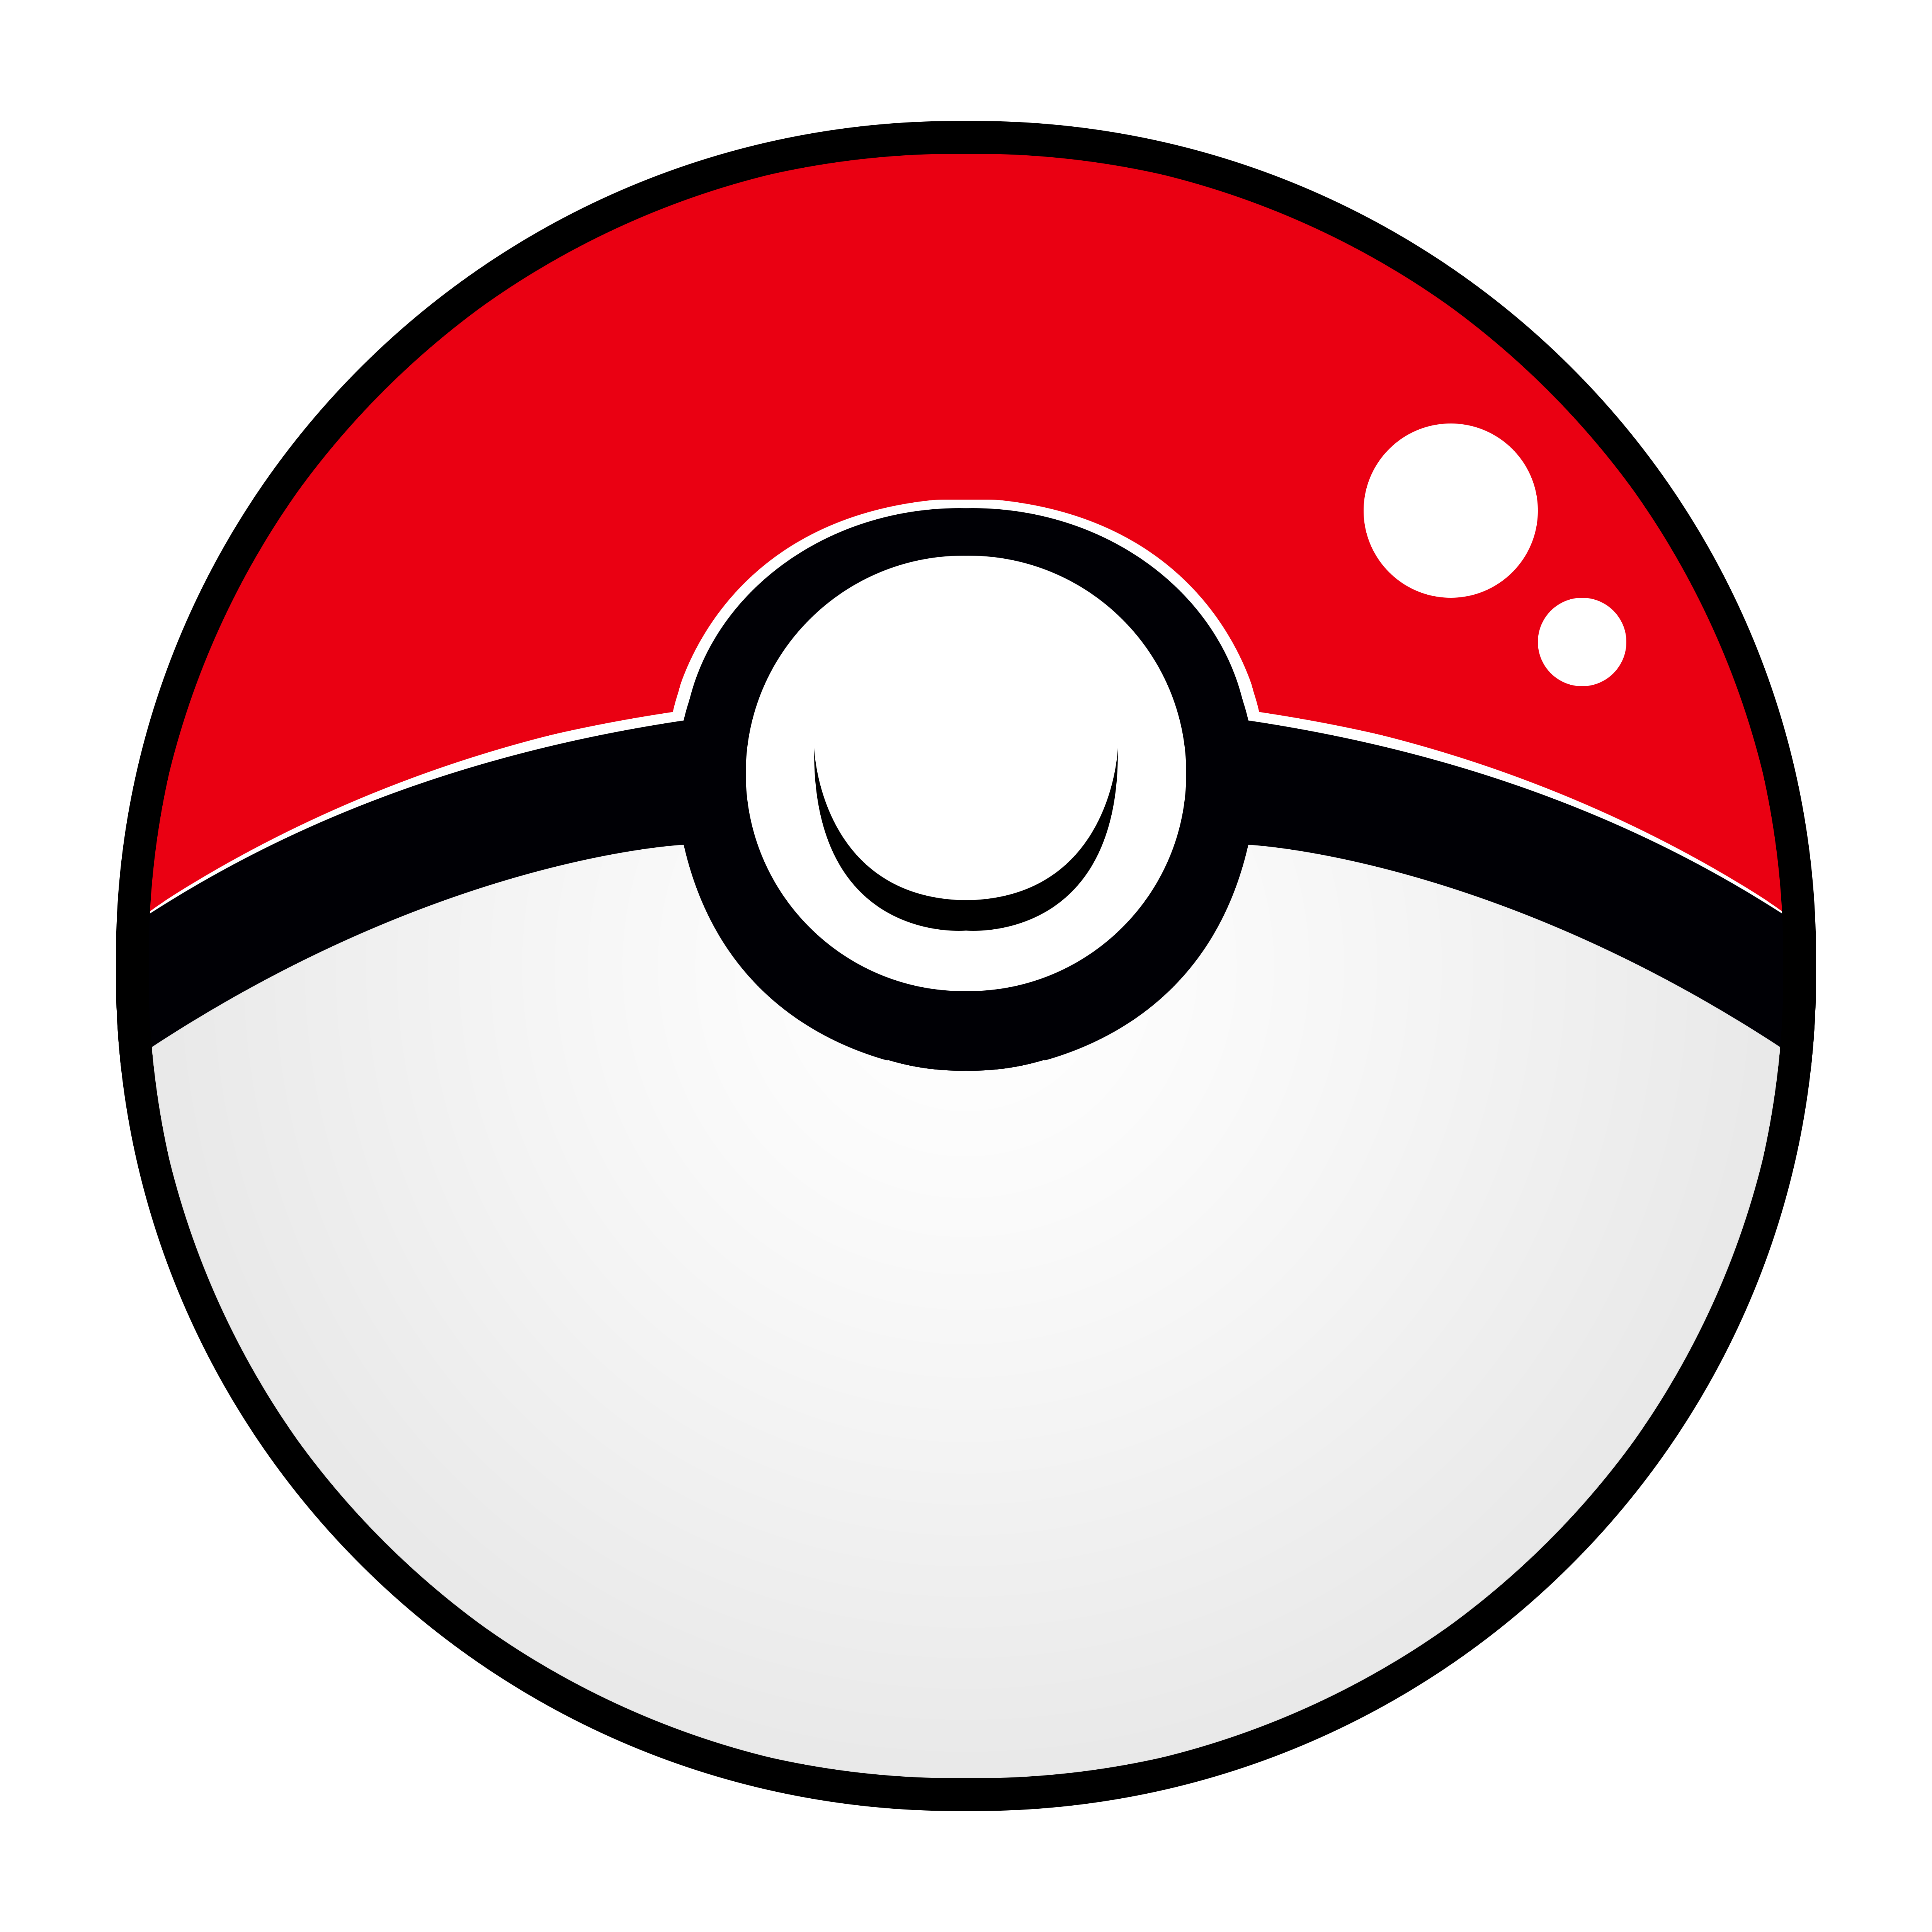 device, pokemon ball and pokemon capture ball. 